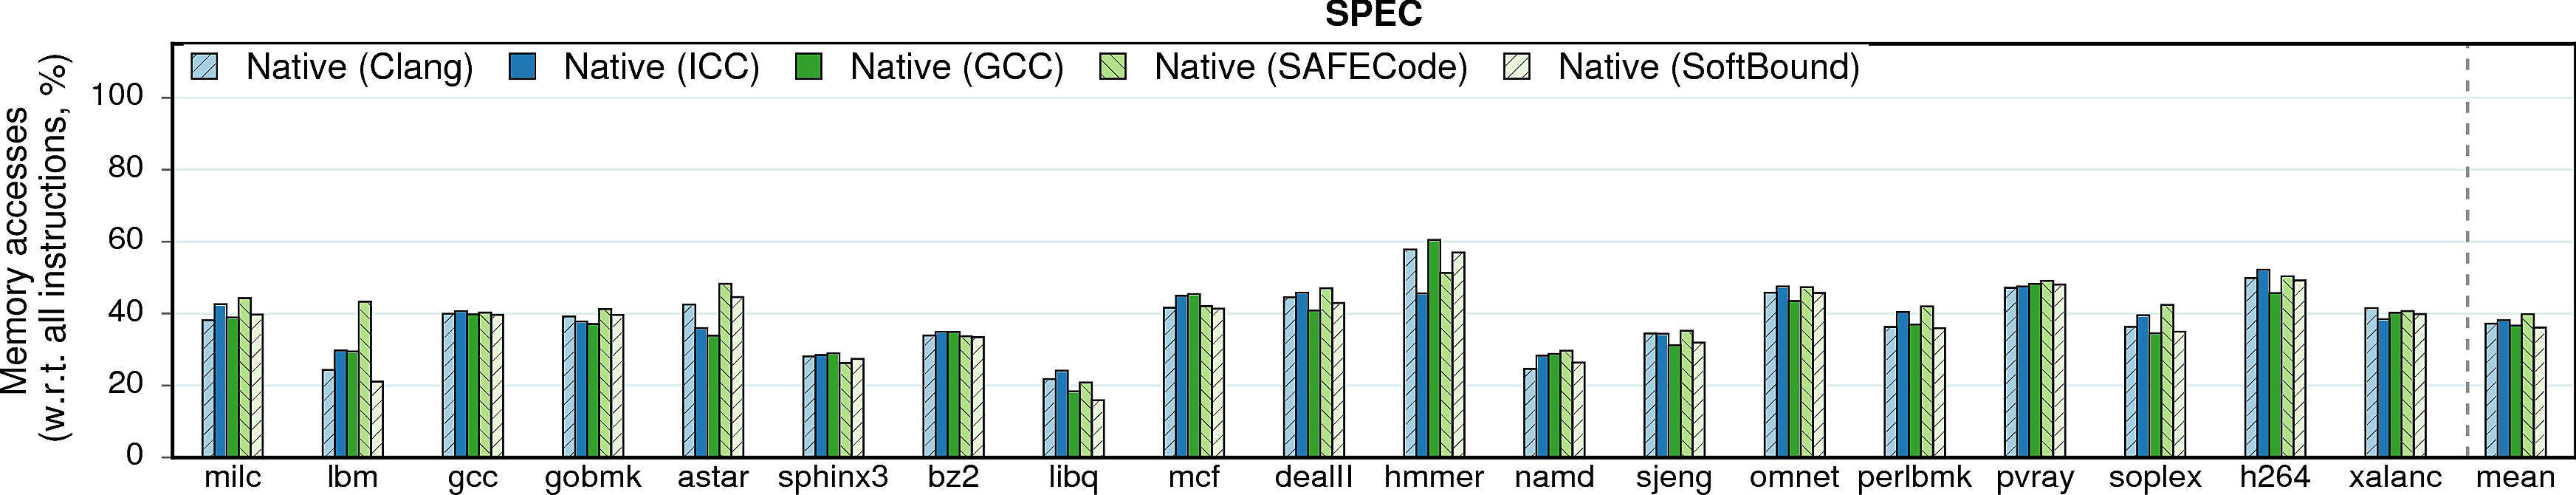 Native memory accesses of SPEC